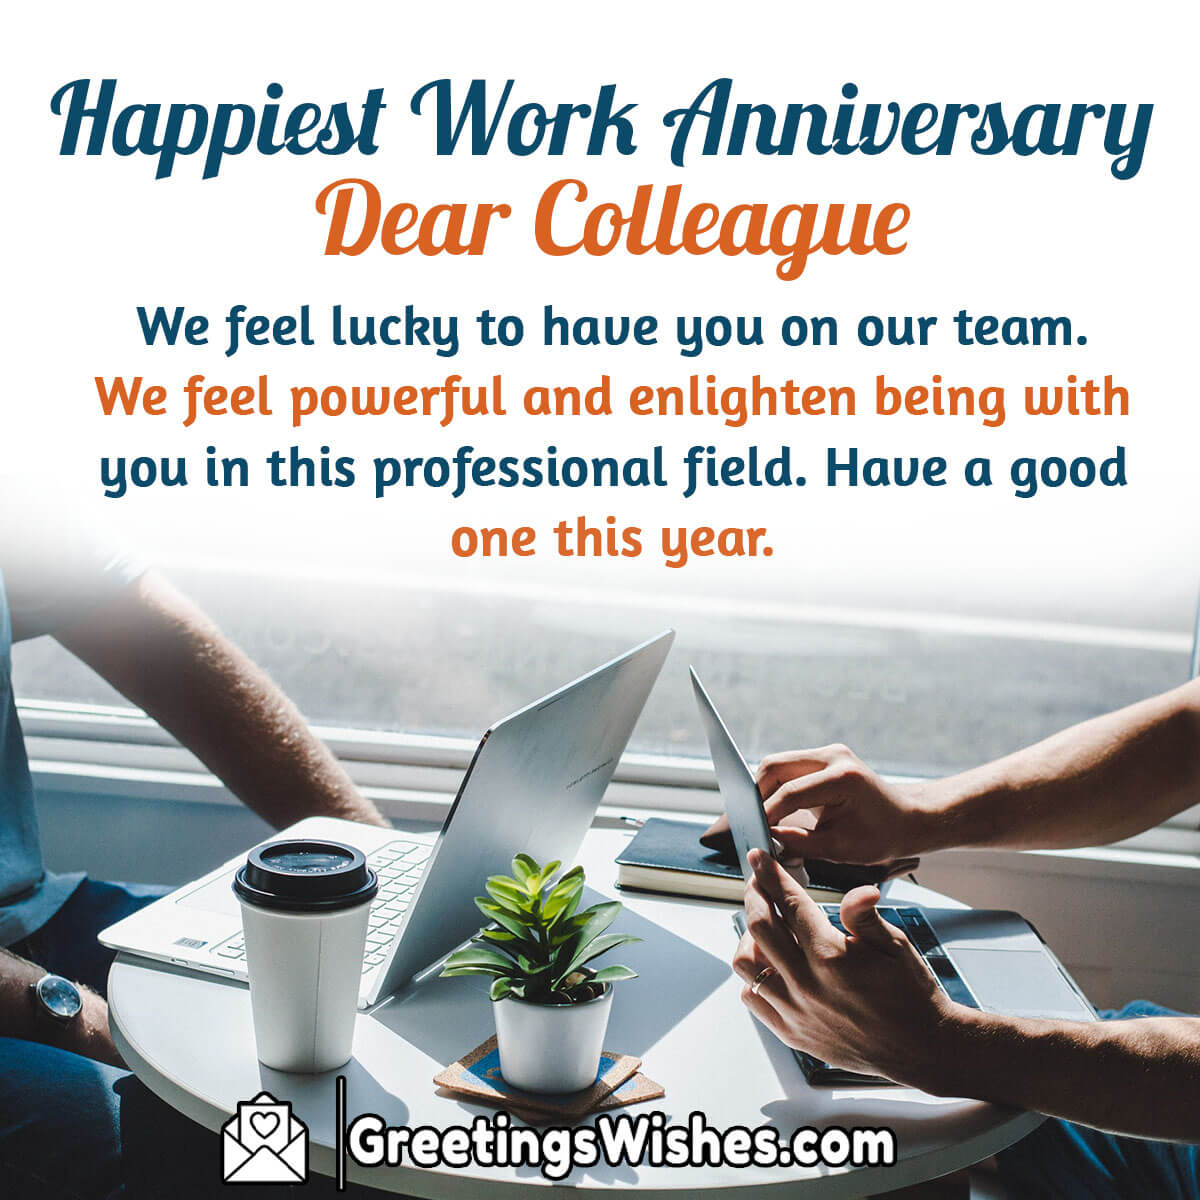 Happiest Work Anniversary Dear Colleague